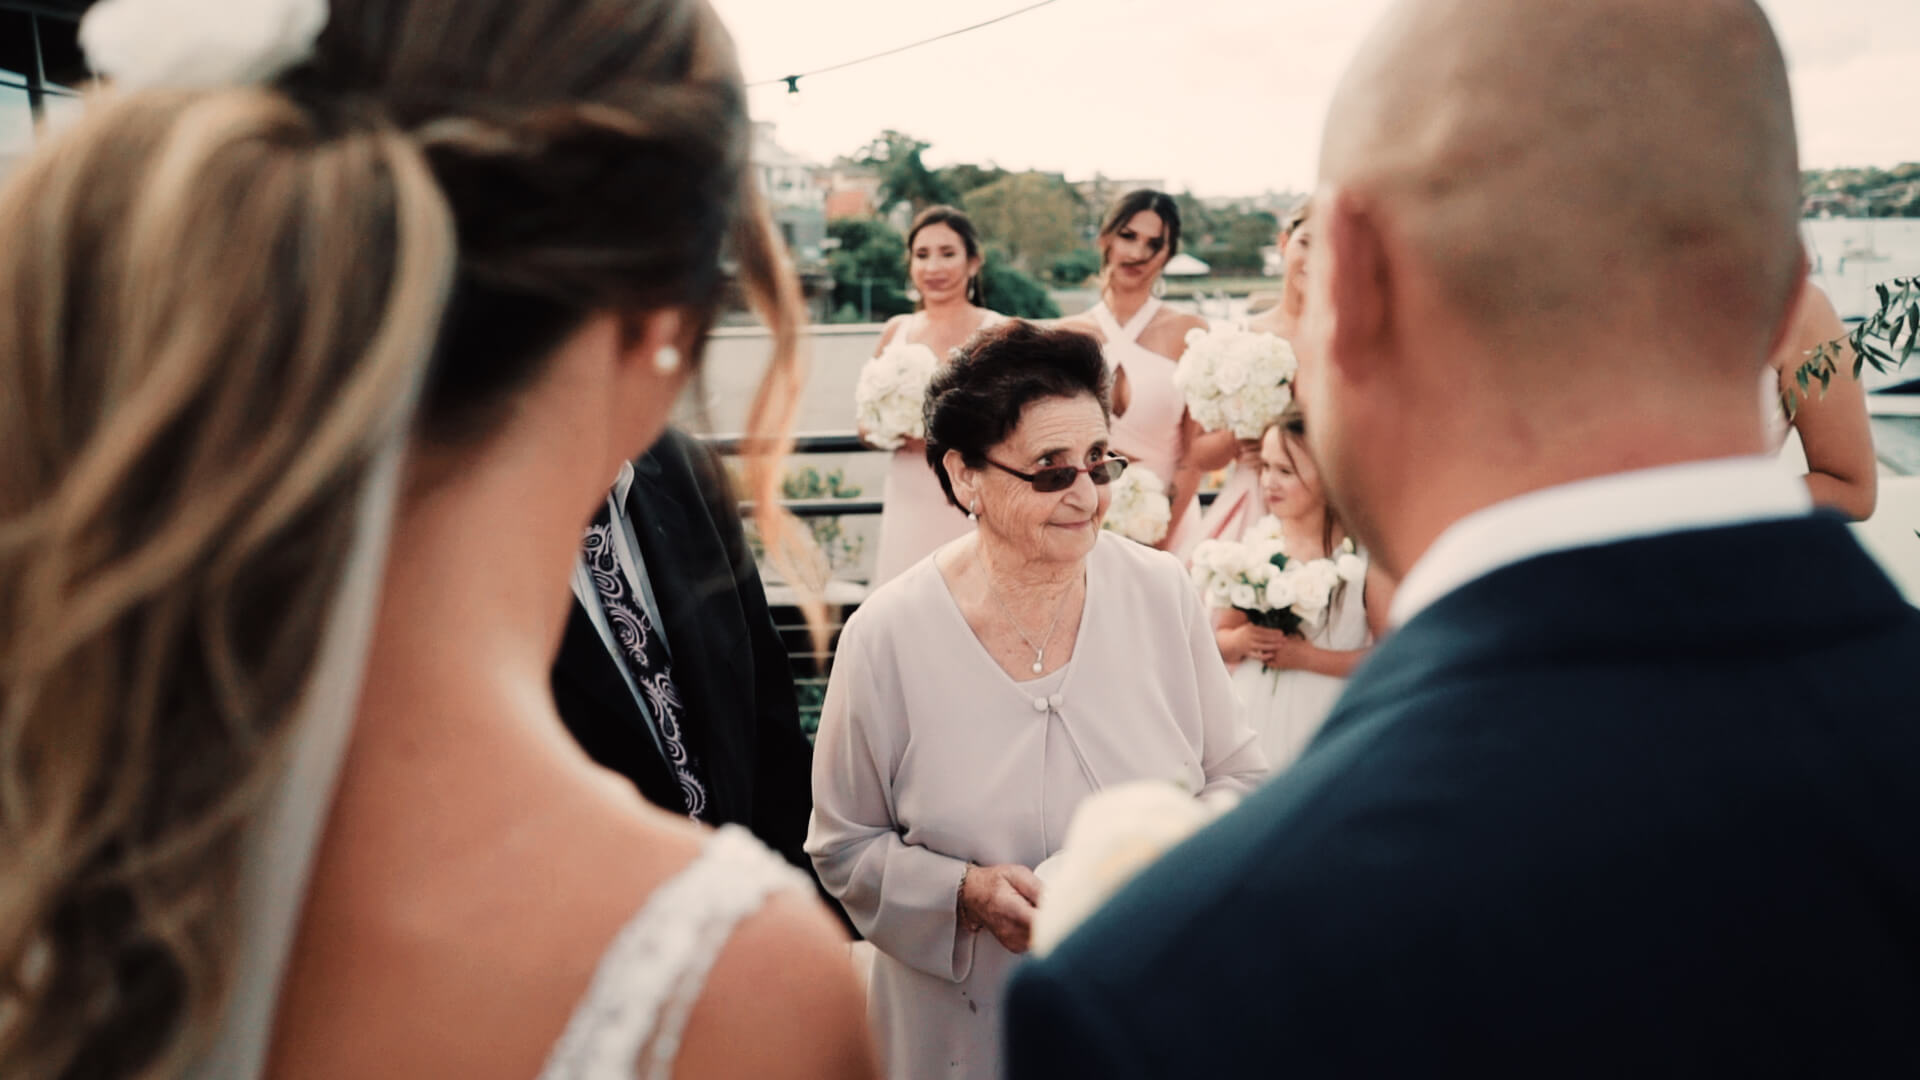 grandma bringing the wedding rings